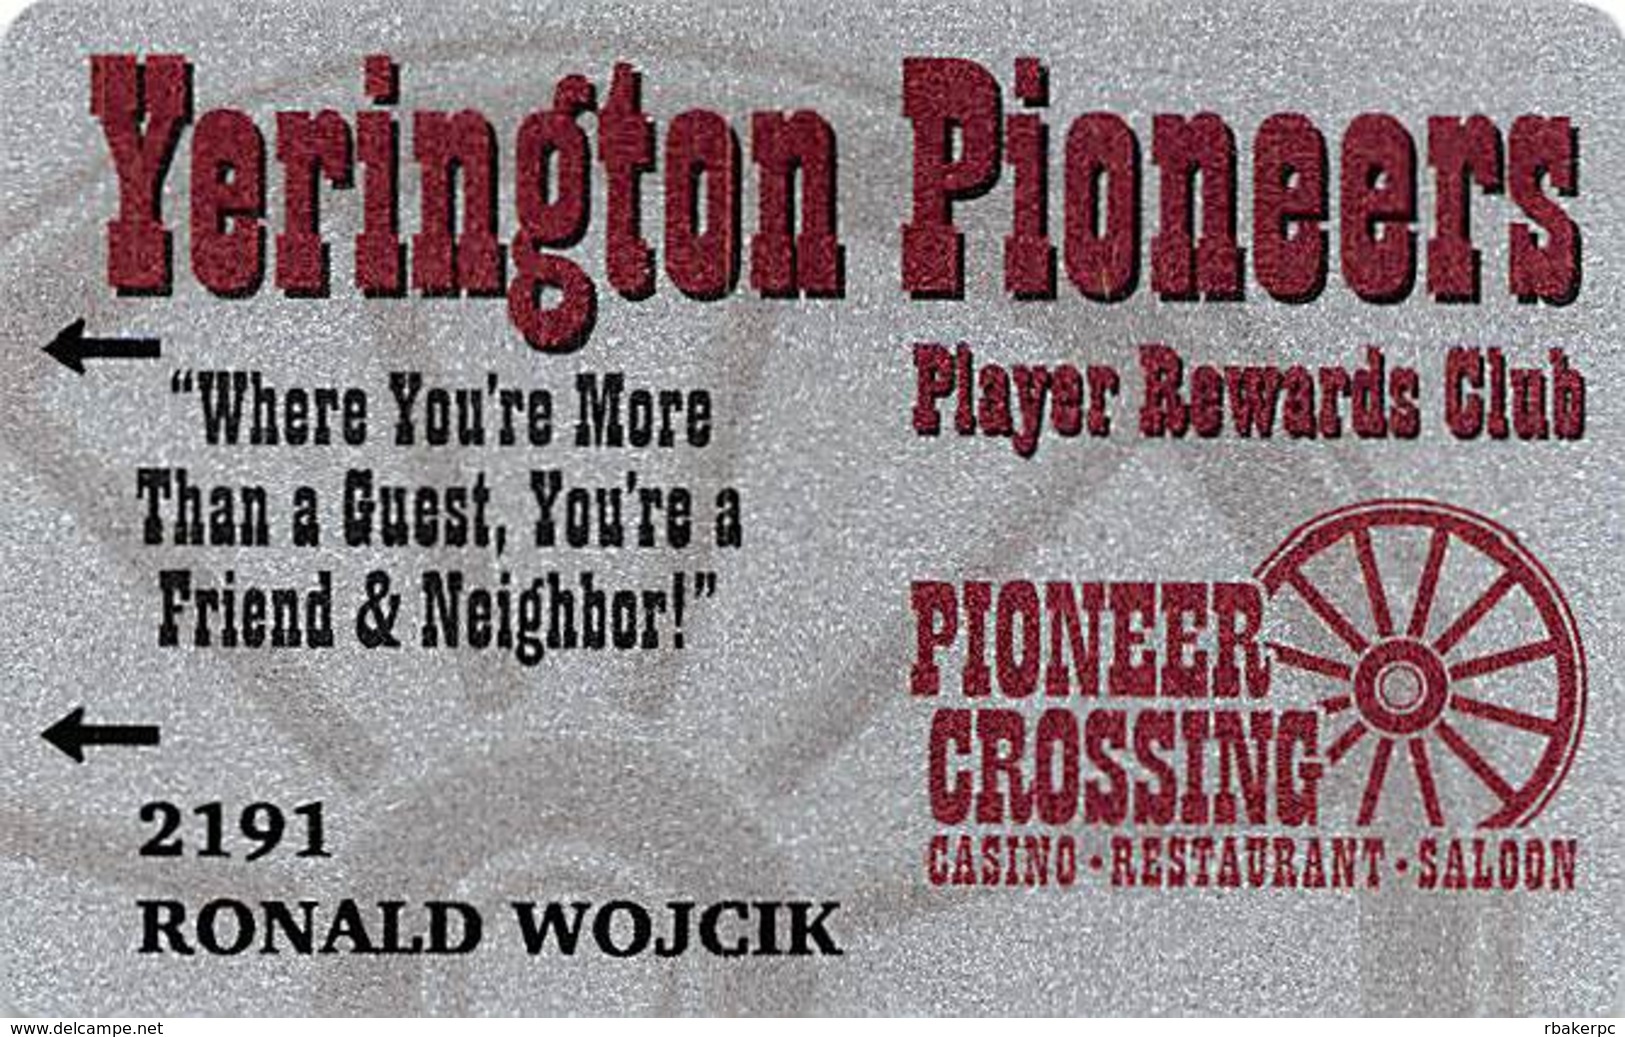 Yerington Pioneer Crossing Casino - Yerington, NV - Slot Card - Casino Cards